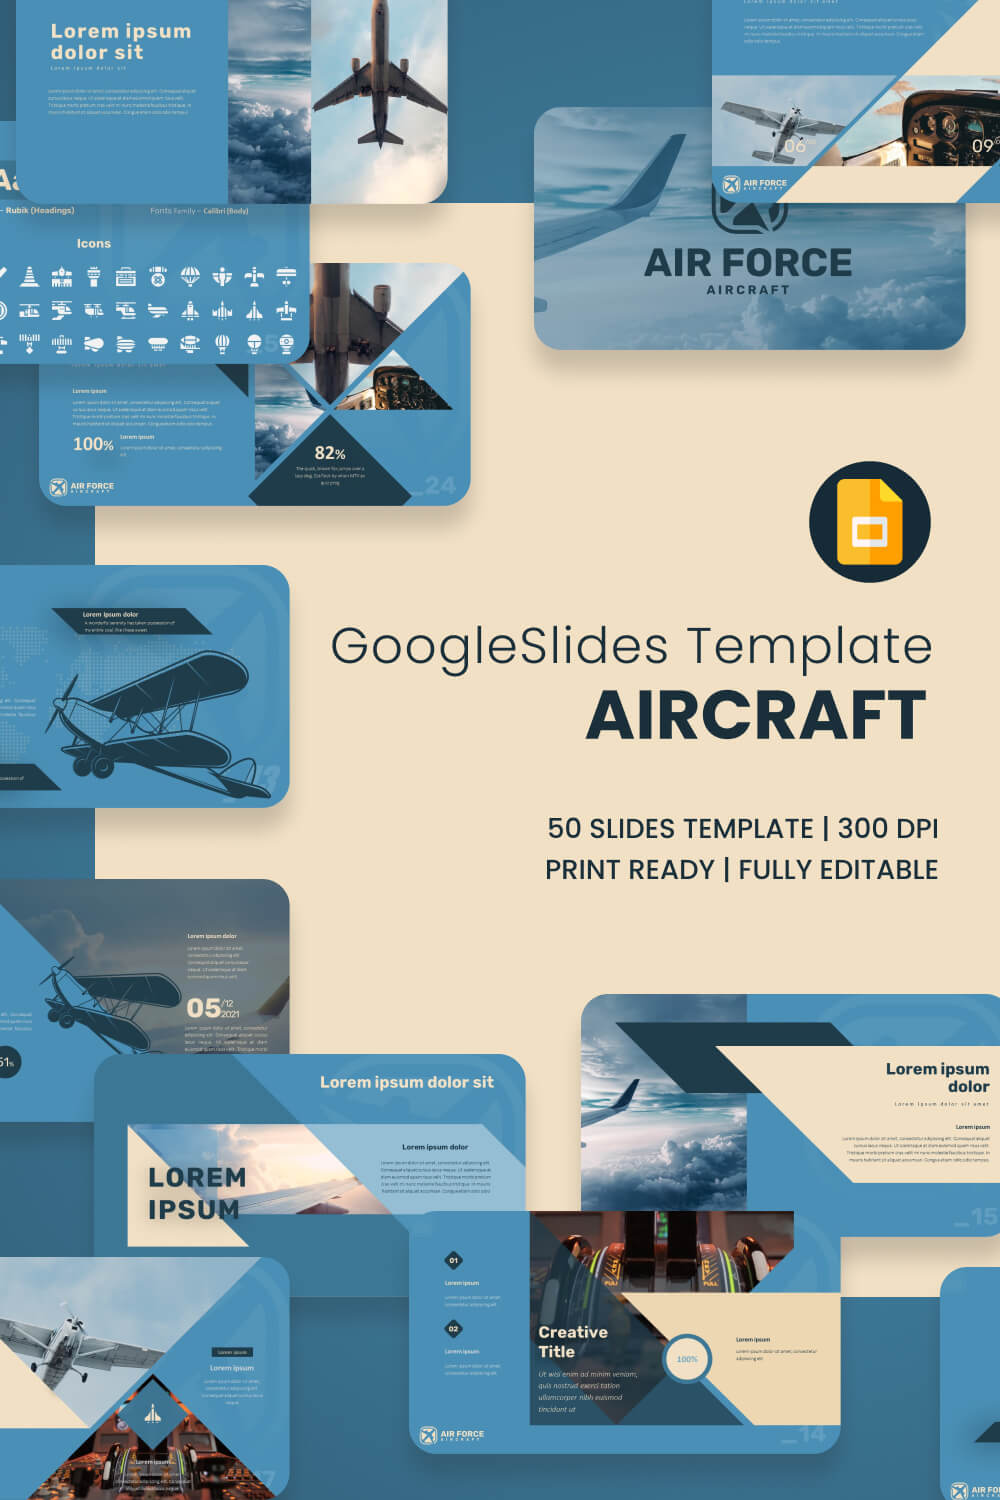 AirForce Military Google Slides Theme pinterest image.